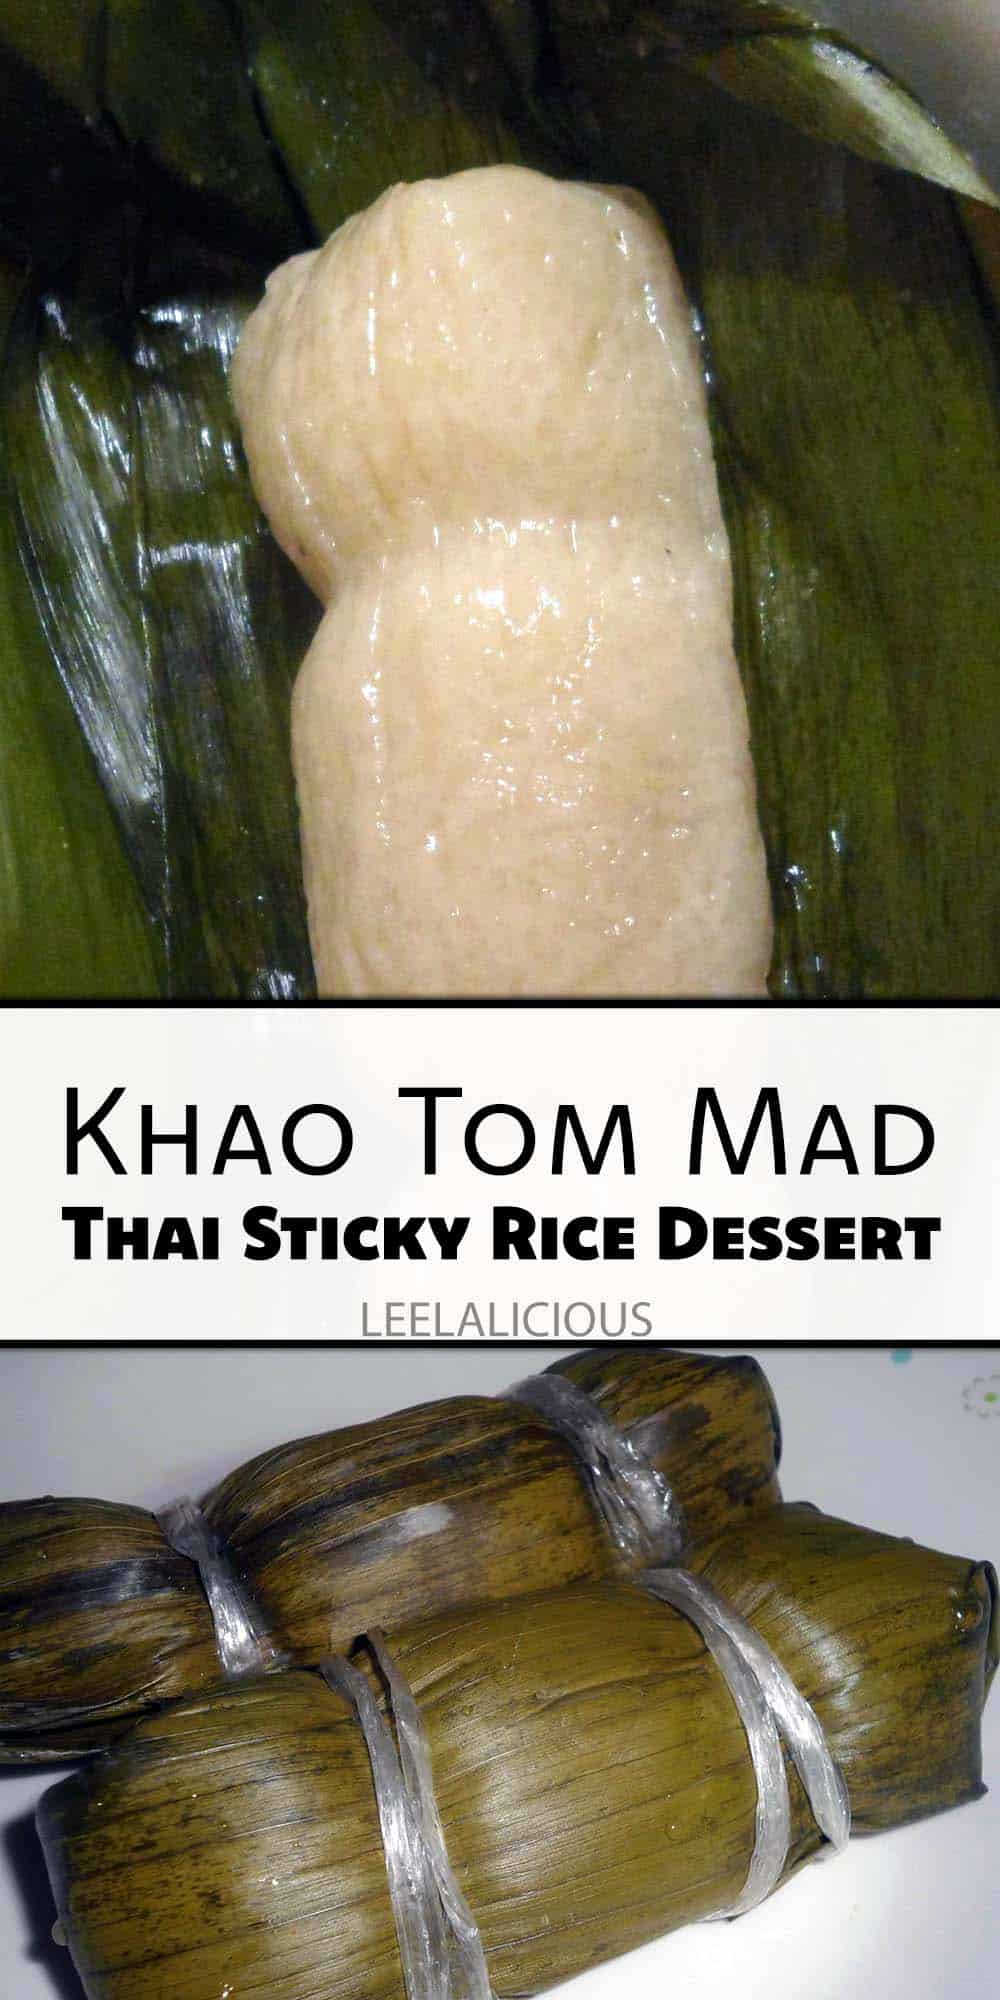 Khao Tom Mad: Thai Sticky Rice Dessert with Recipe